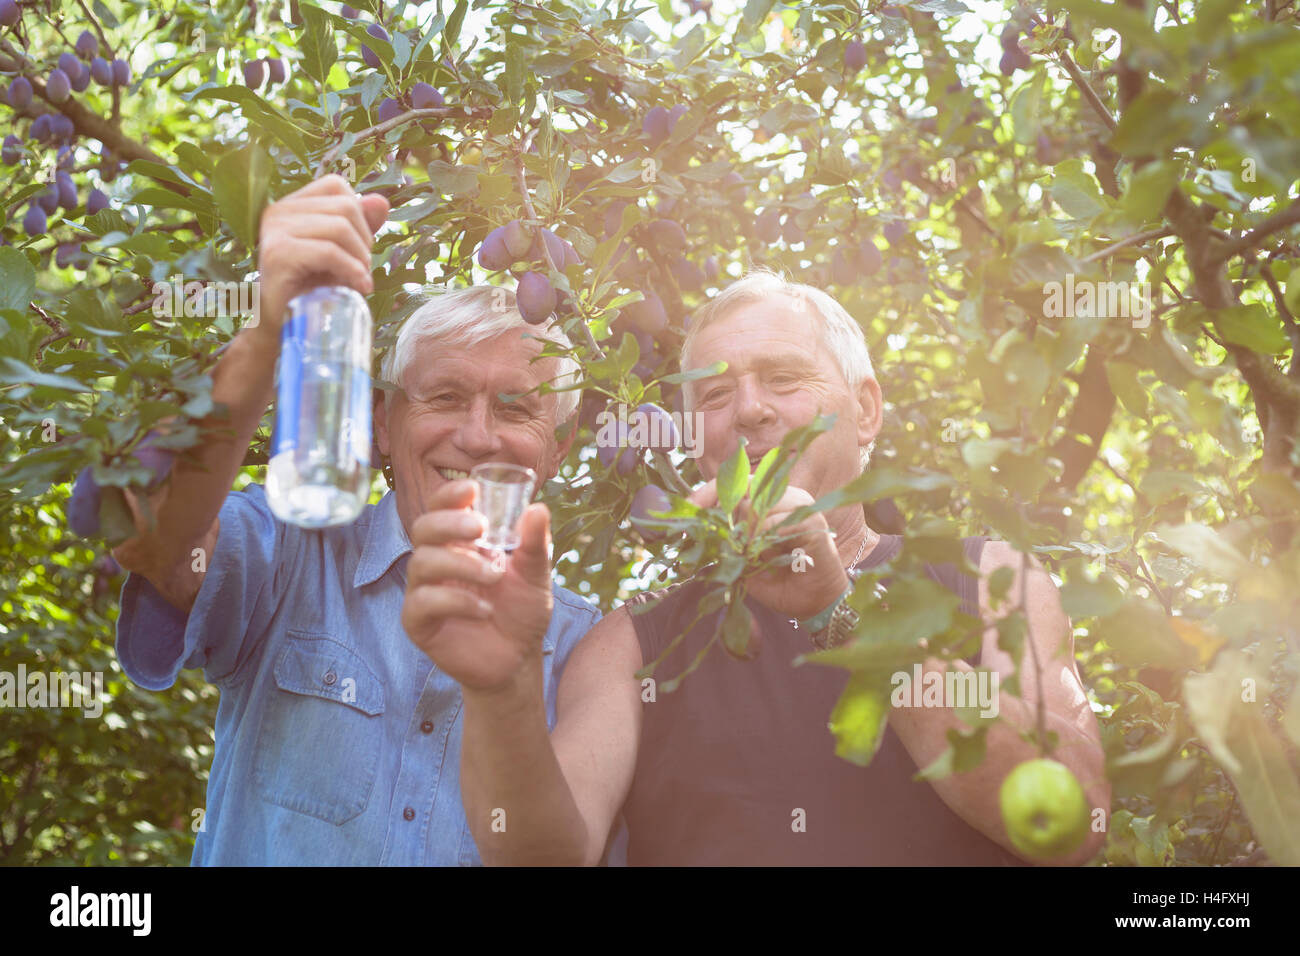 Two happy seniors with bottle of alcohol enjoying sunny day outdoors under fruit trees. Stock Photo